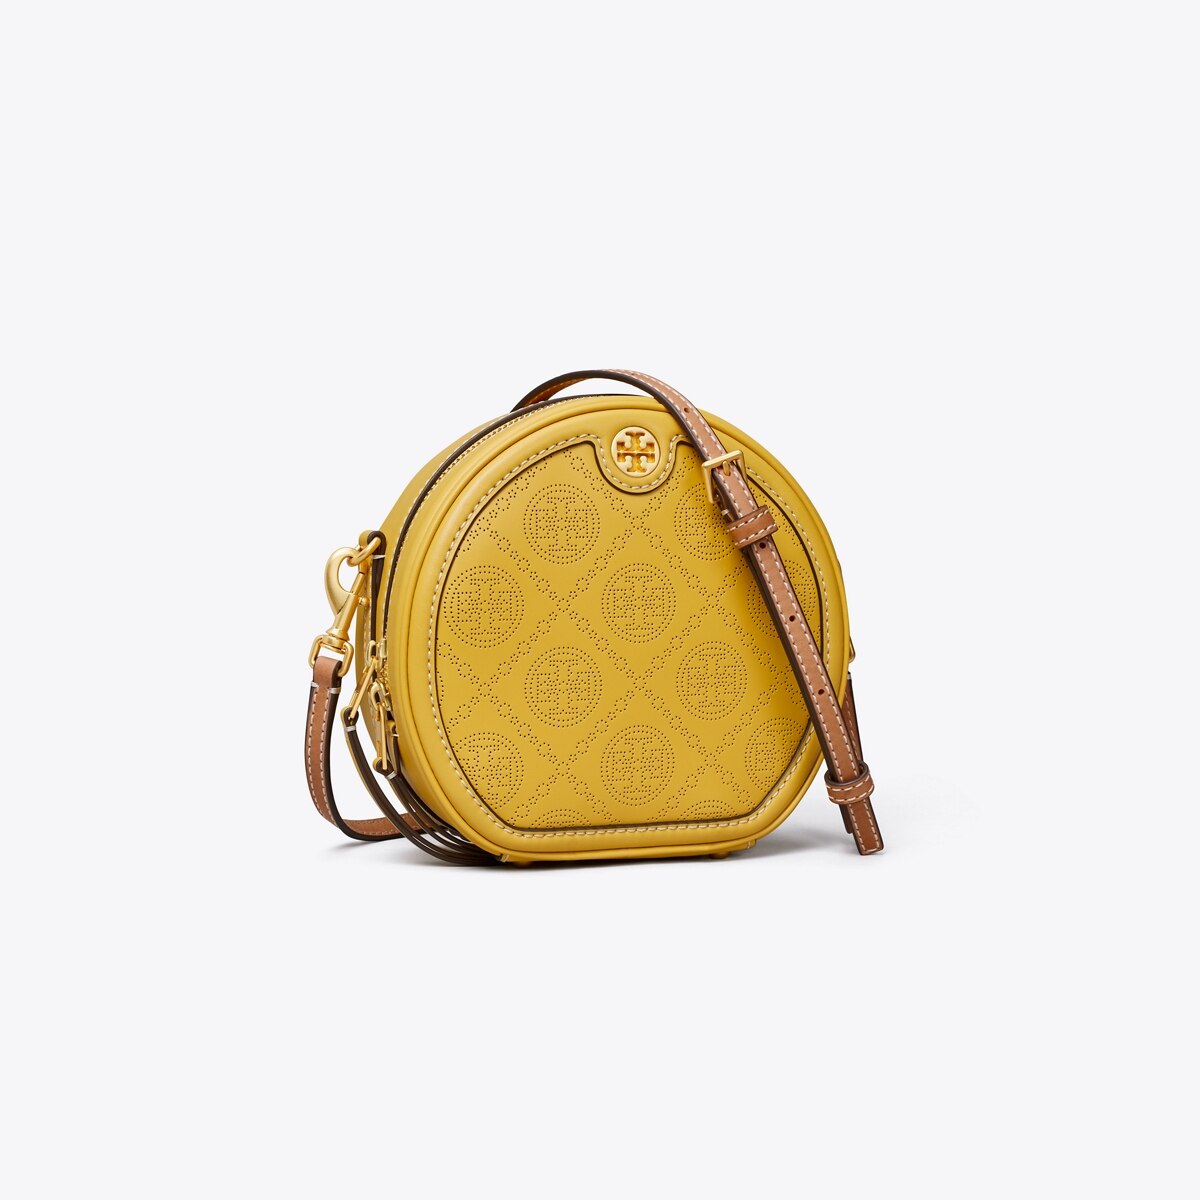 70+ designer bags finds in AliExpress - Louis Vuitton/Tory burch